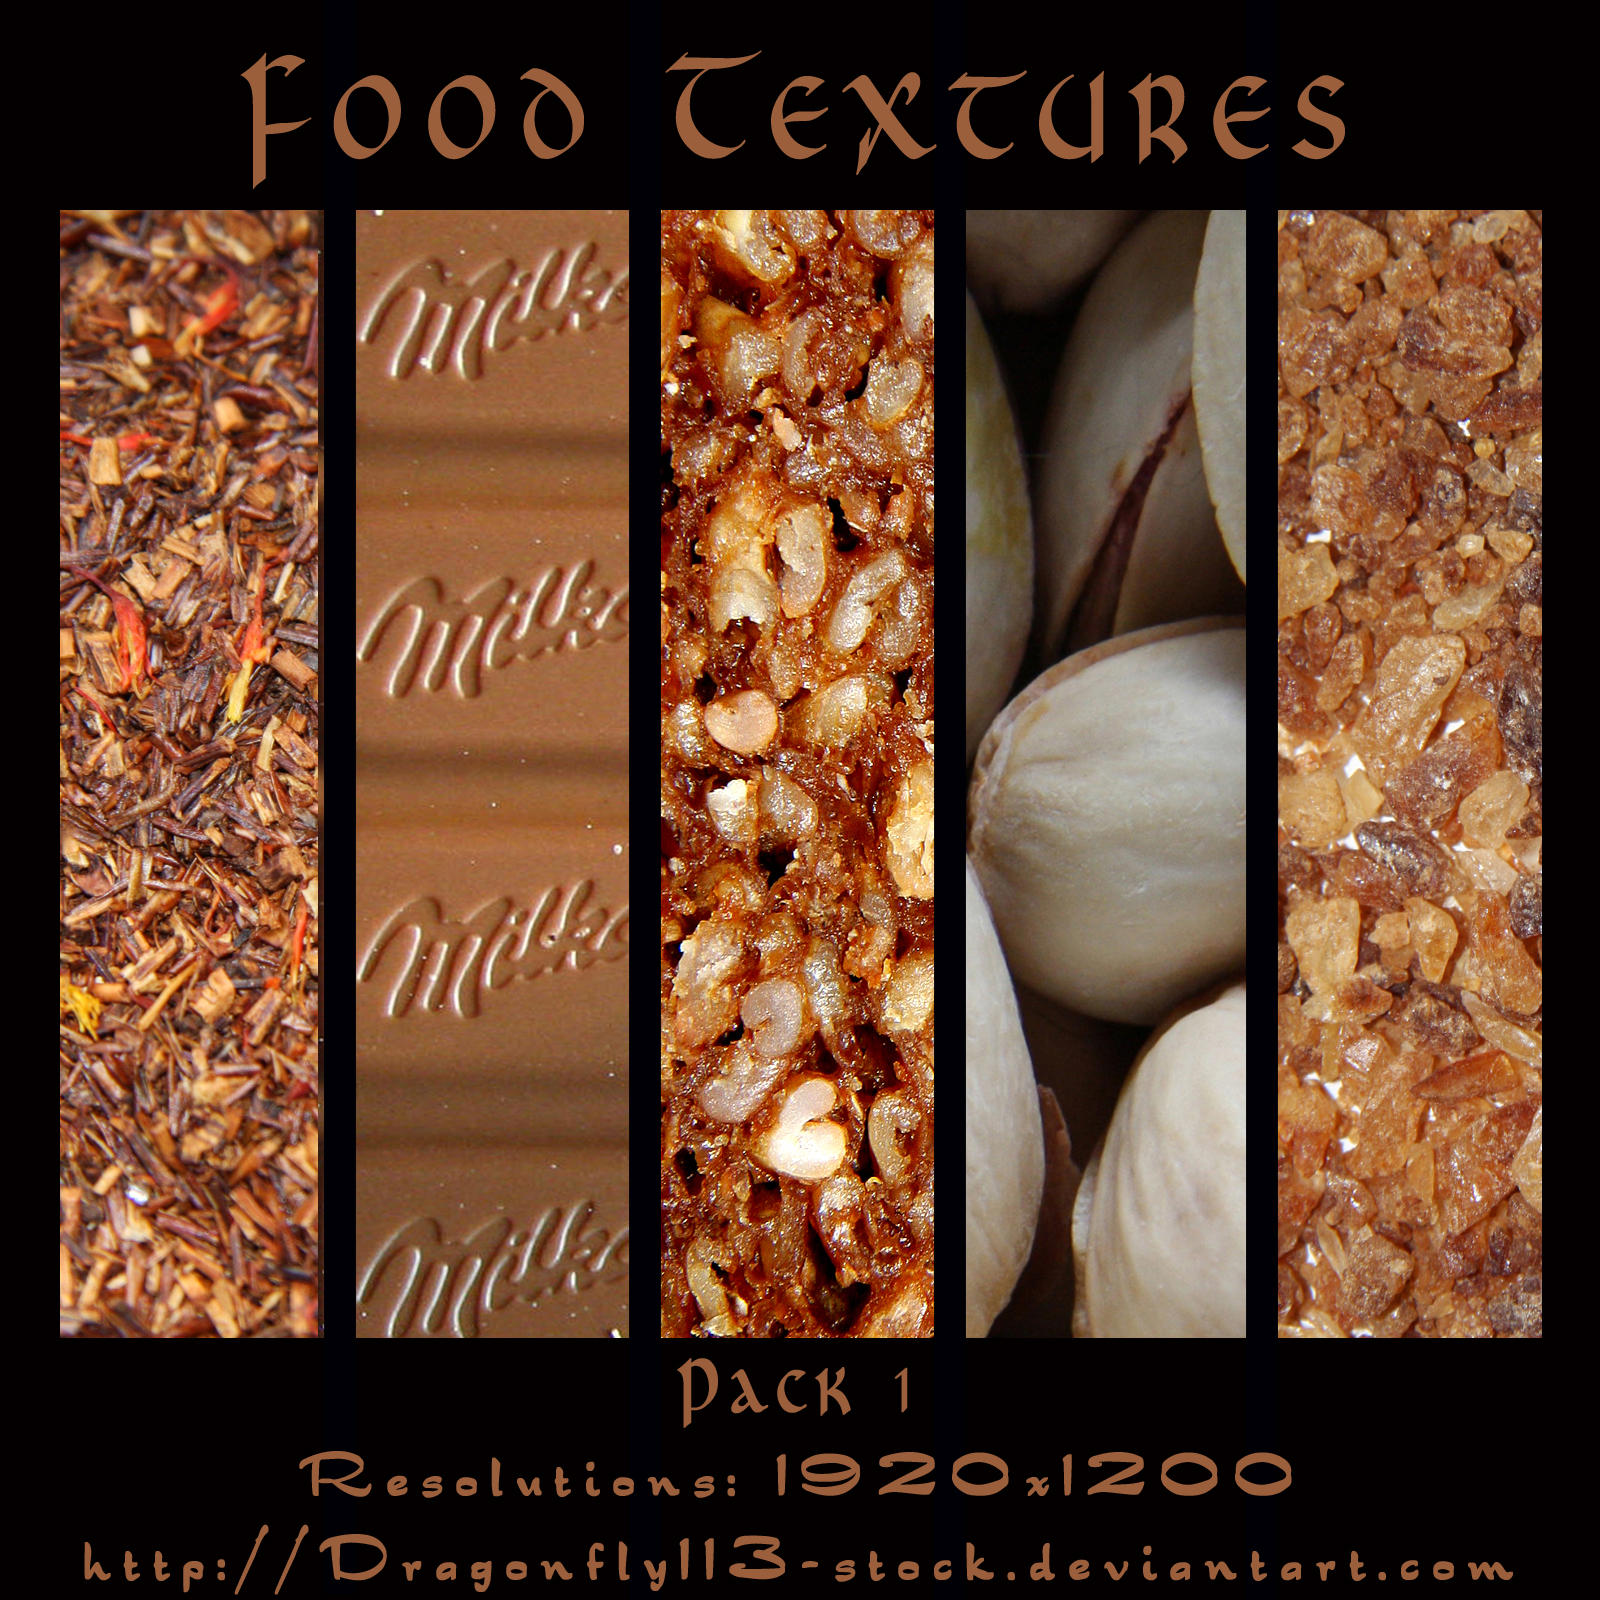 textures of food